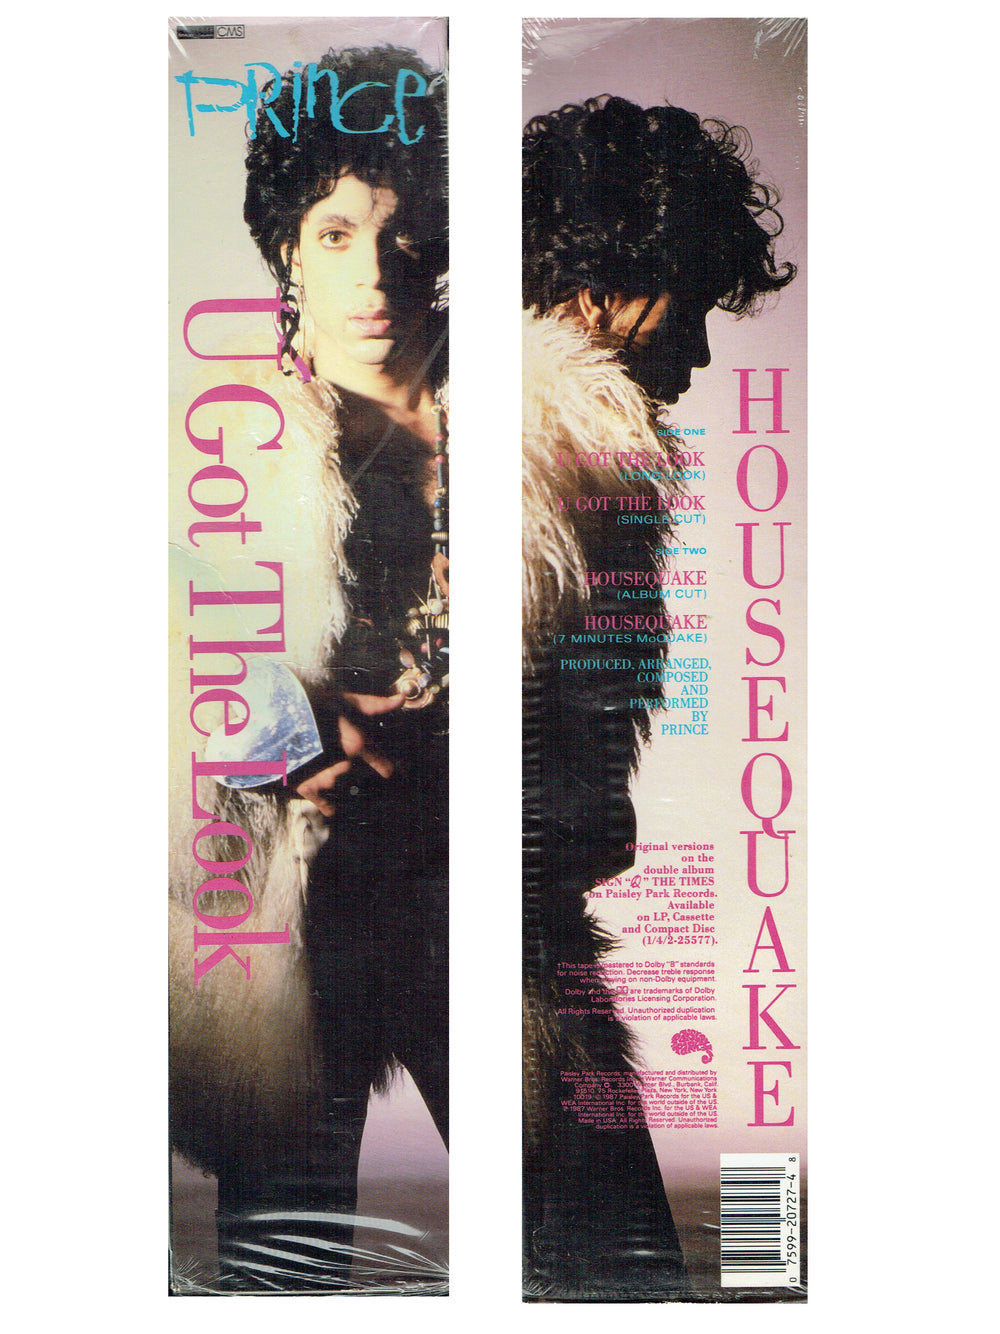 Prince U Got The Look USA Tape Cassette Single In Long Box Still In Cellophane RARE